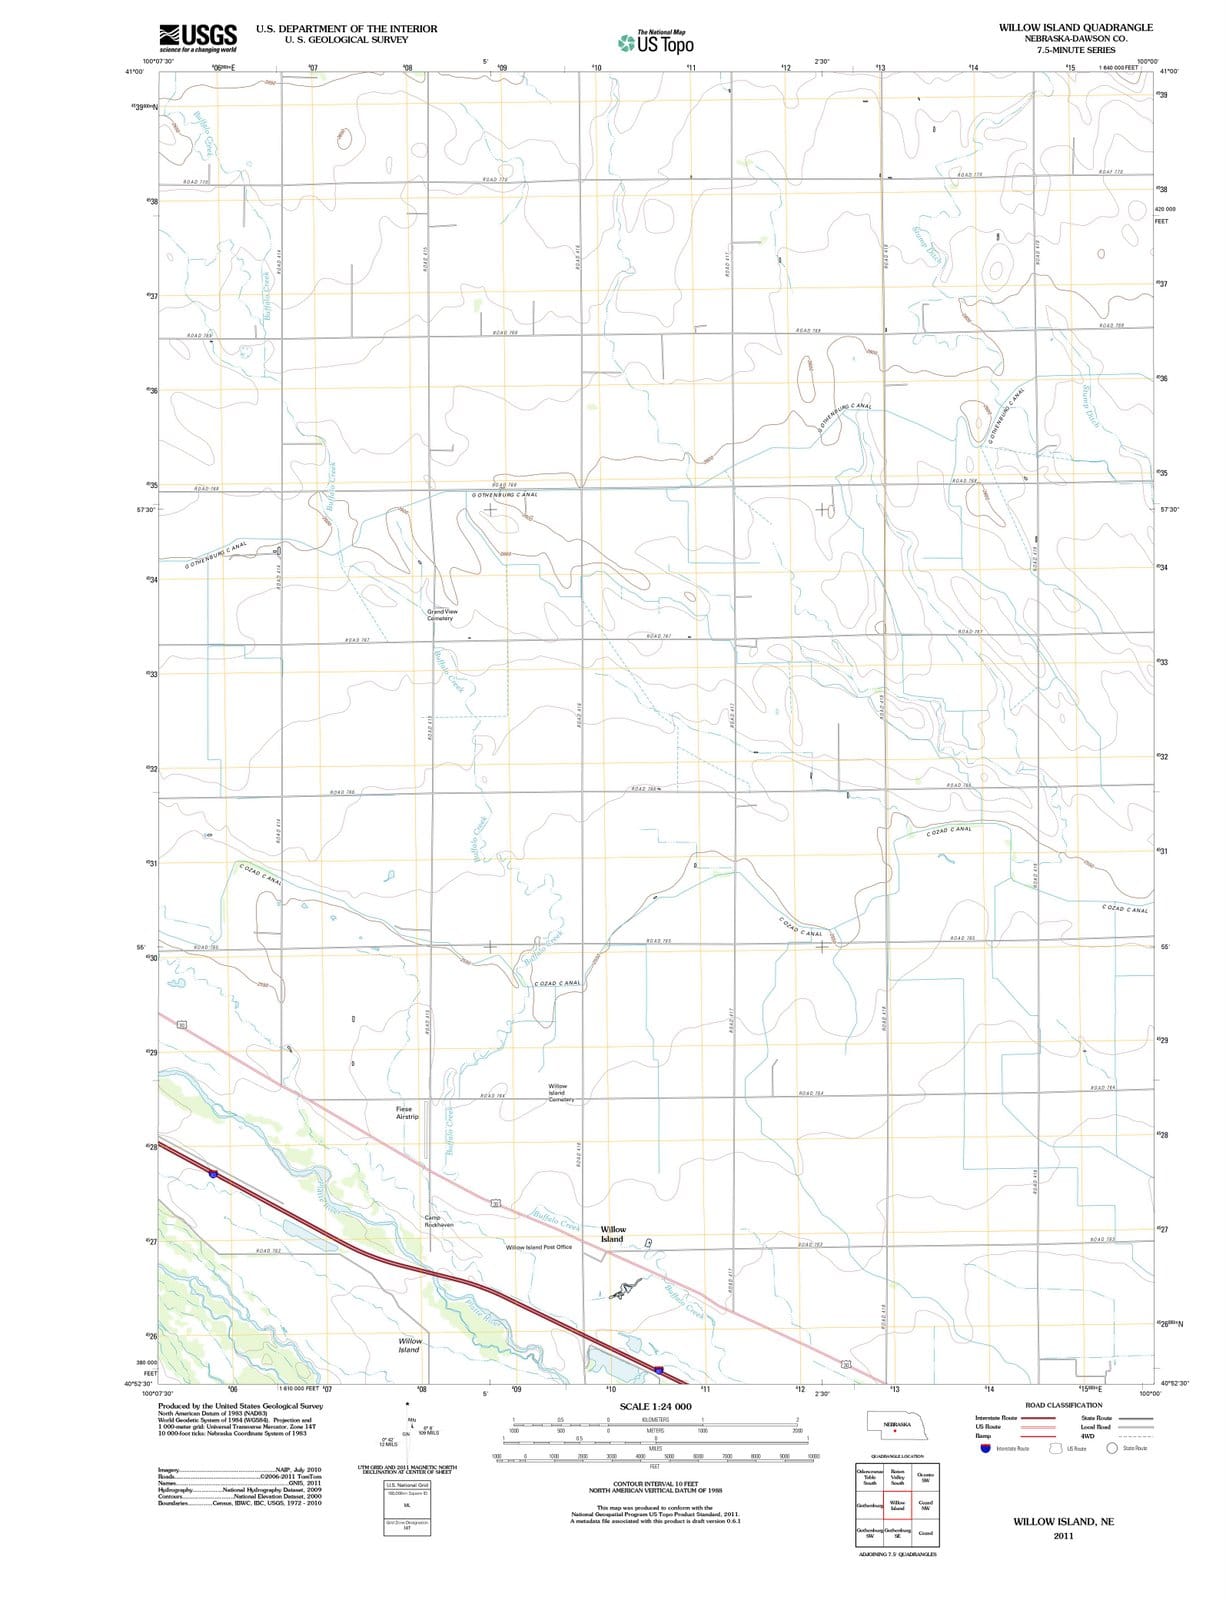 2011 Willow Island, NE - Nebraska - USGS Topographic Map